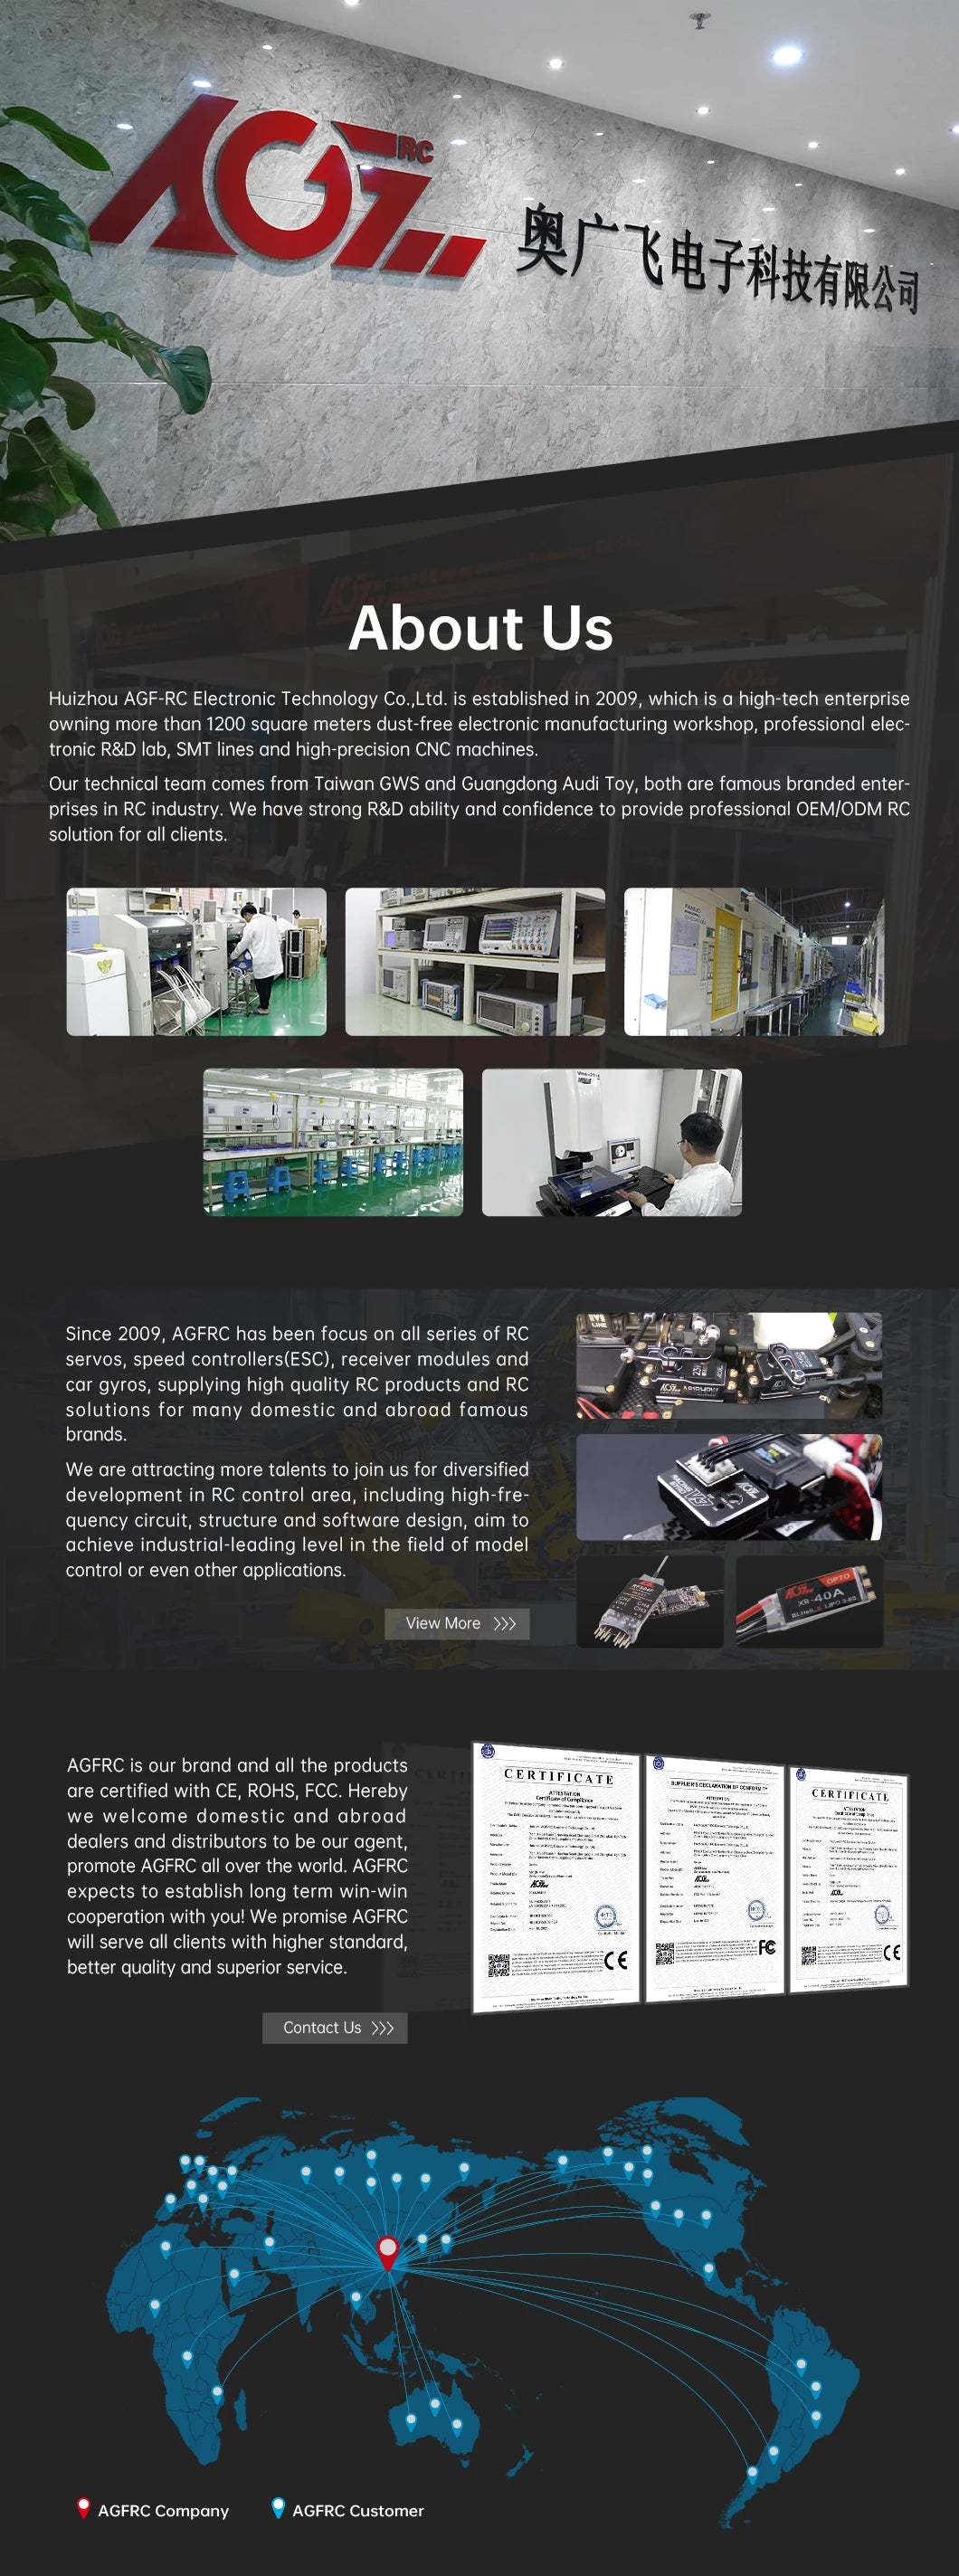 AGFRC A80BHSW V2, Huizhou AGF-RC Electronic Technology Co-,Ltd. is a